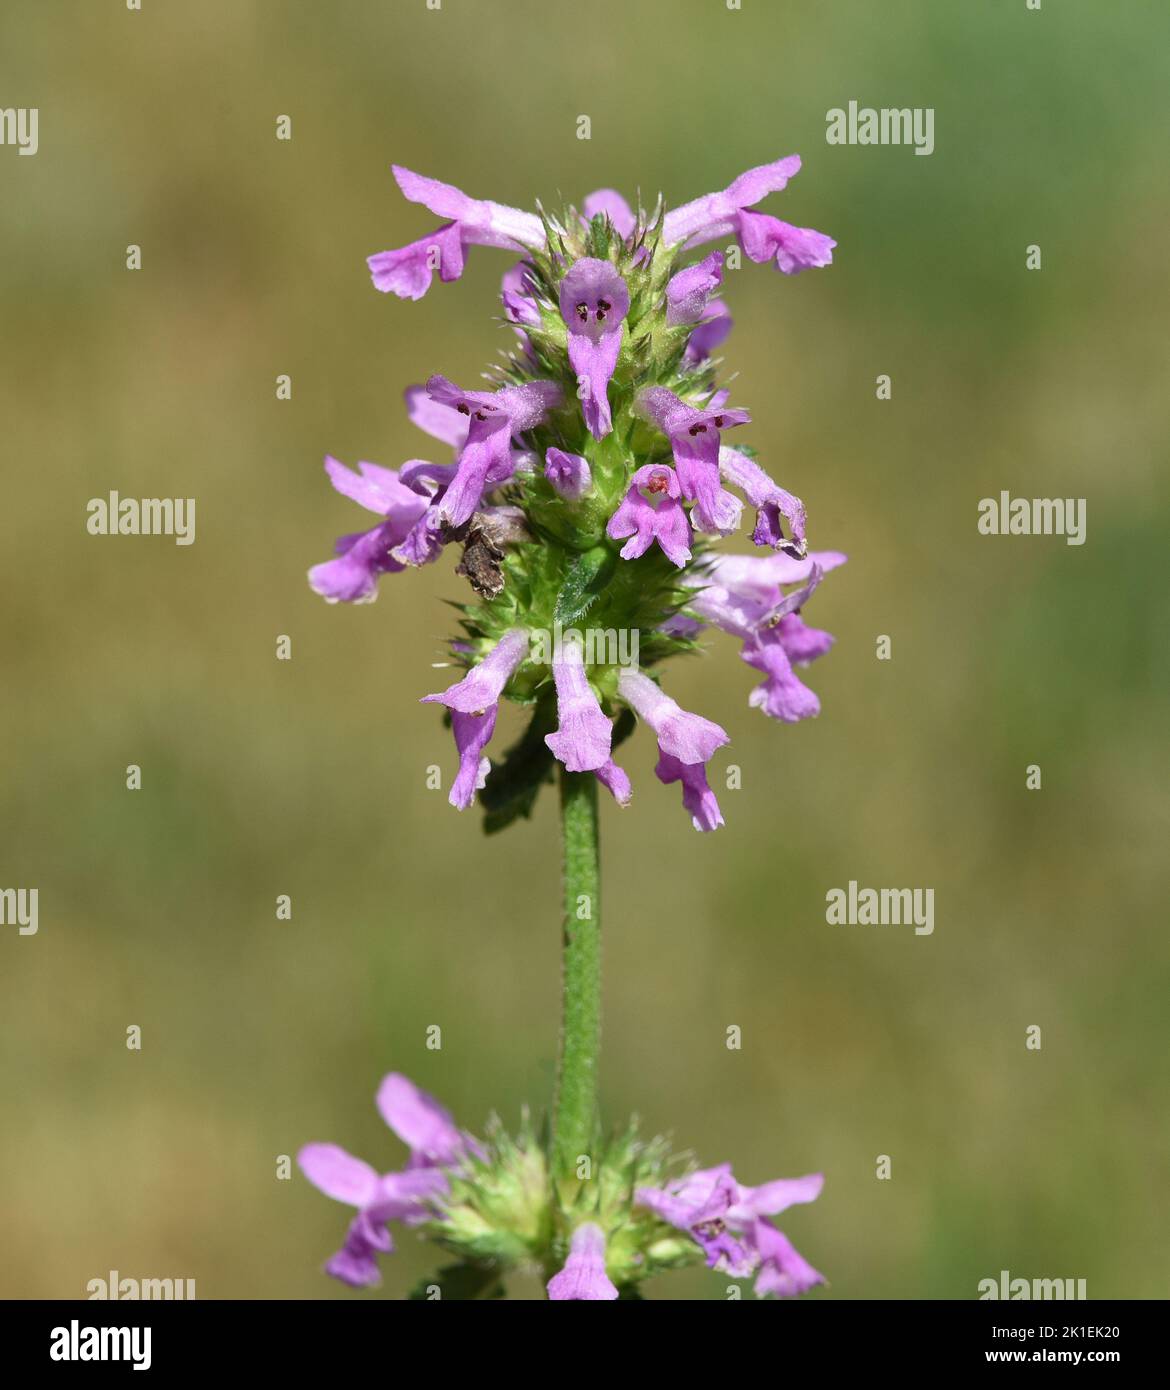 Ziest, Stachys officinalis è un'importante pianta medicinale con fiori viola. Foto Stock